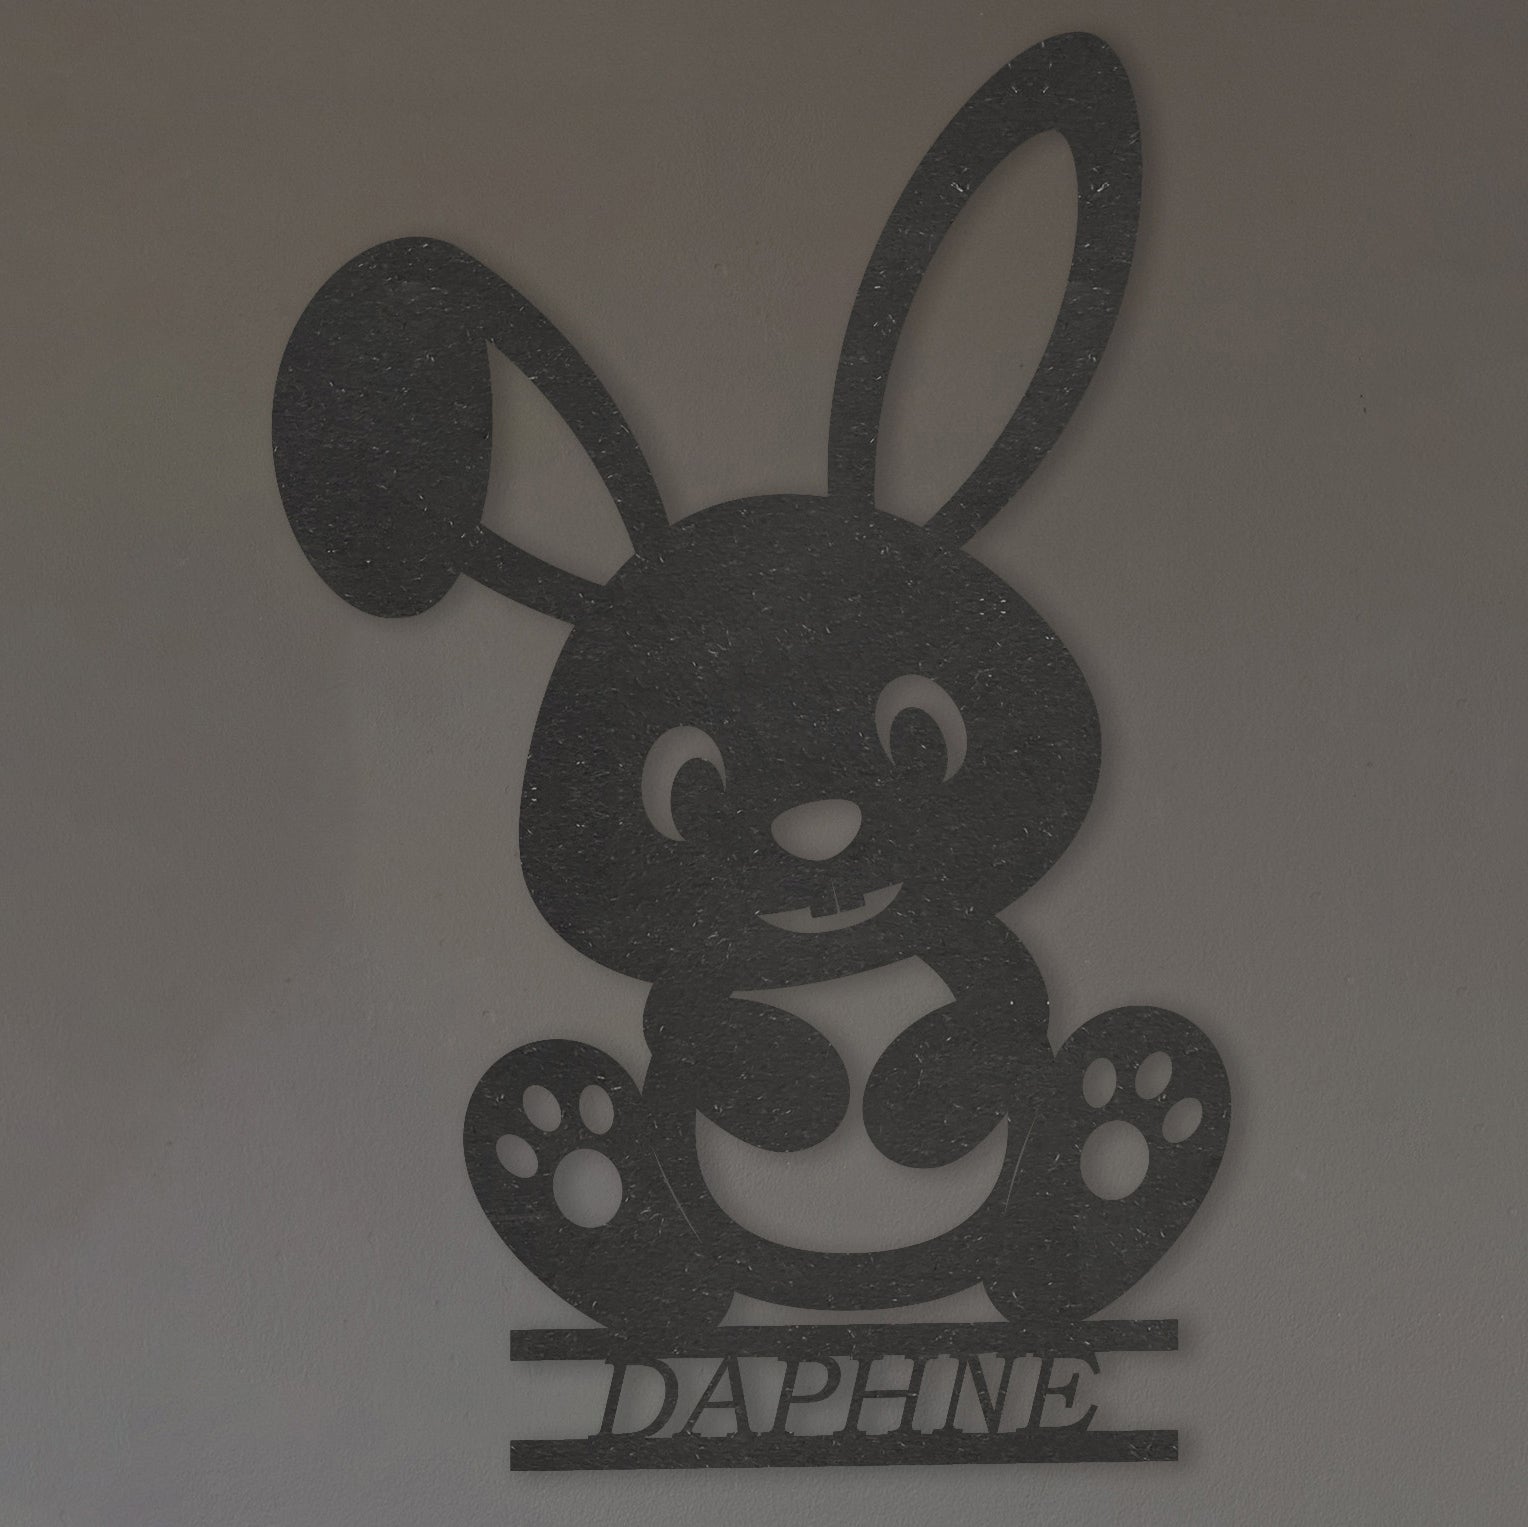 Wanddecoratie kinderen | konijn